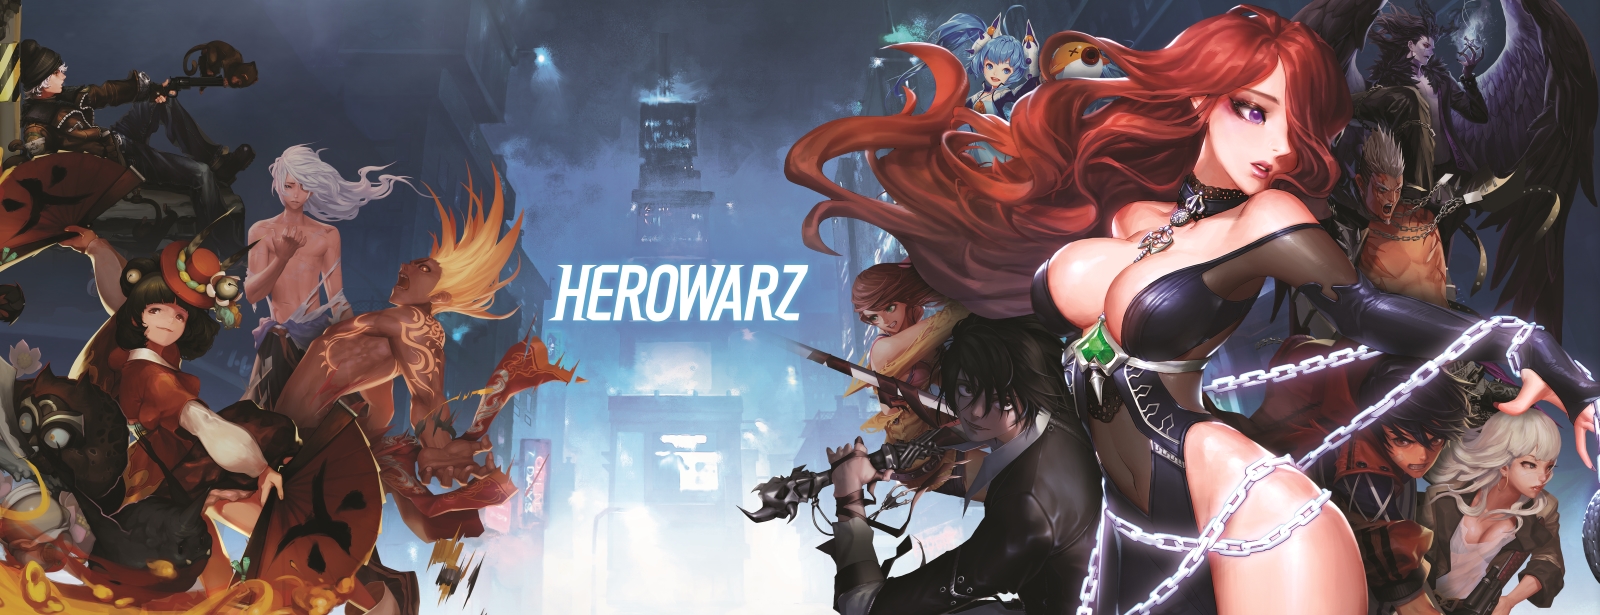 HeroWarz Closed Beta Now Live